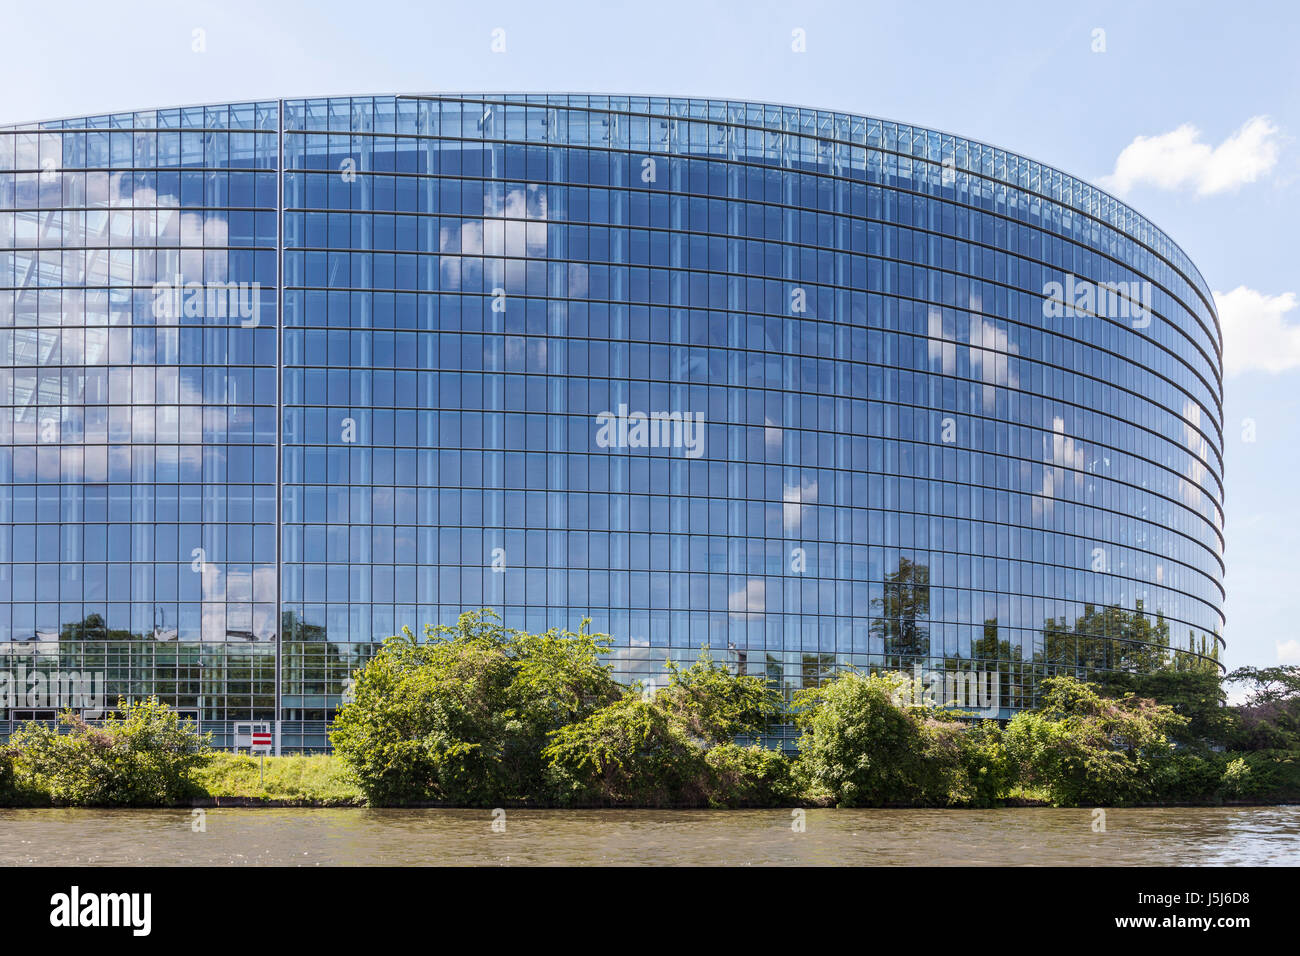 El edificio Louise Weiss - Parlamento Europeo - Estrasburgo, Alsacia, Francia. Foto de stock